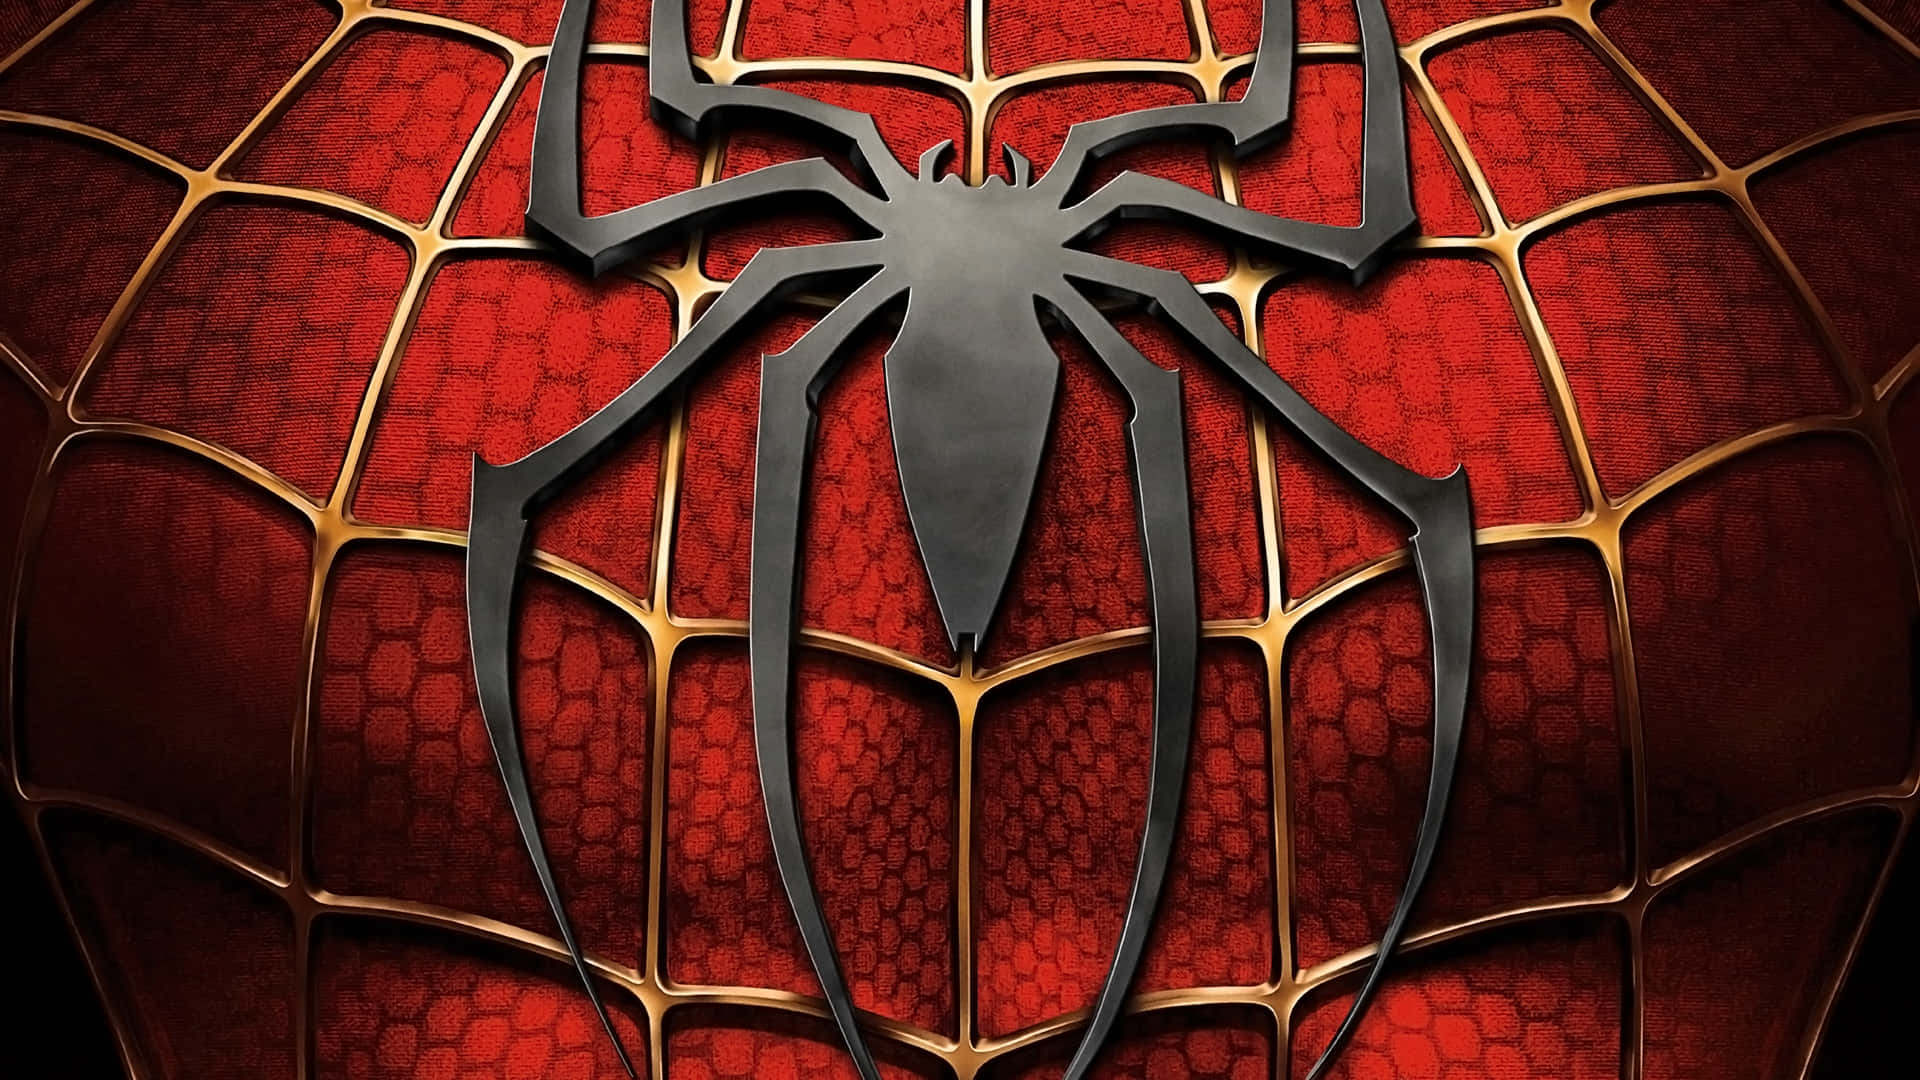 Spider-Man 3 - Web Crawling Action Wallpaper